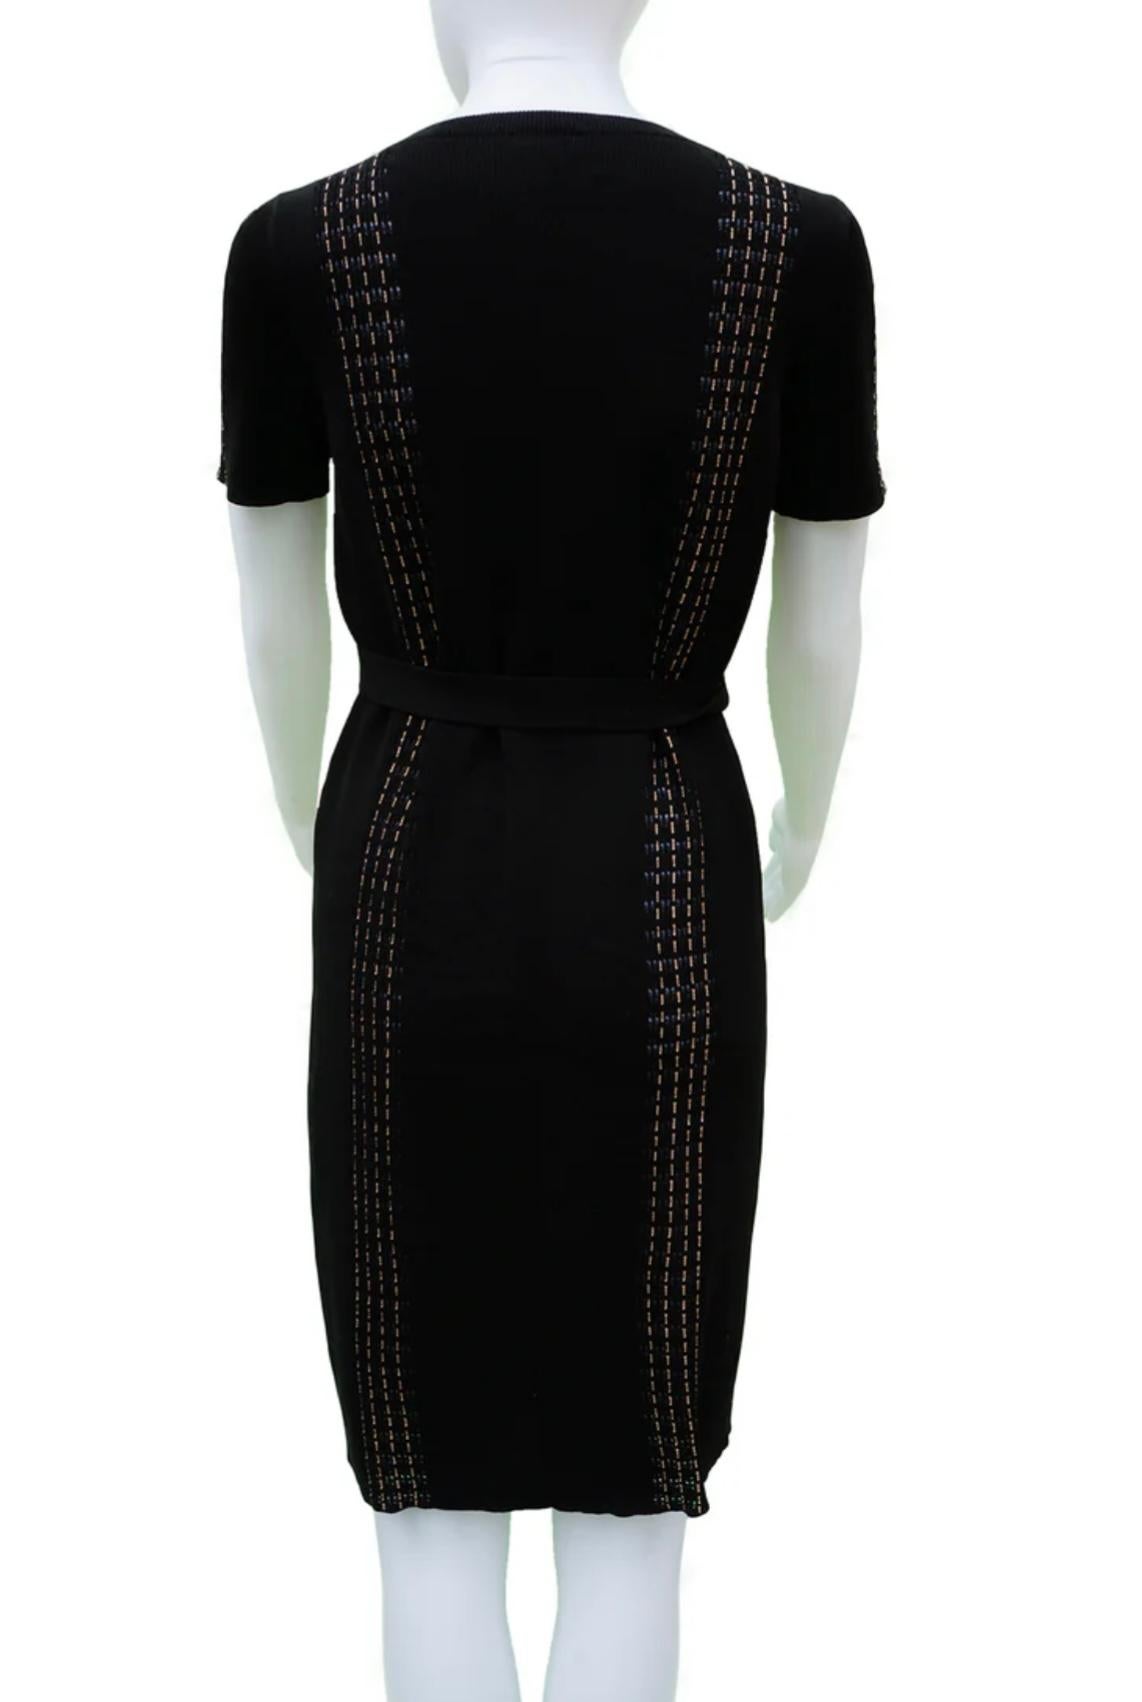 Chanel Coco Cuba Belted Little Black Dress For Sale 4